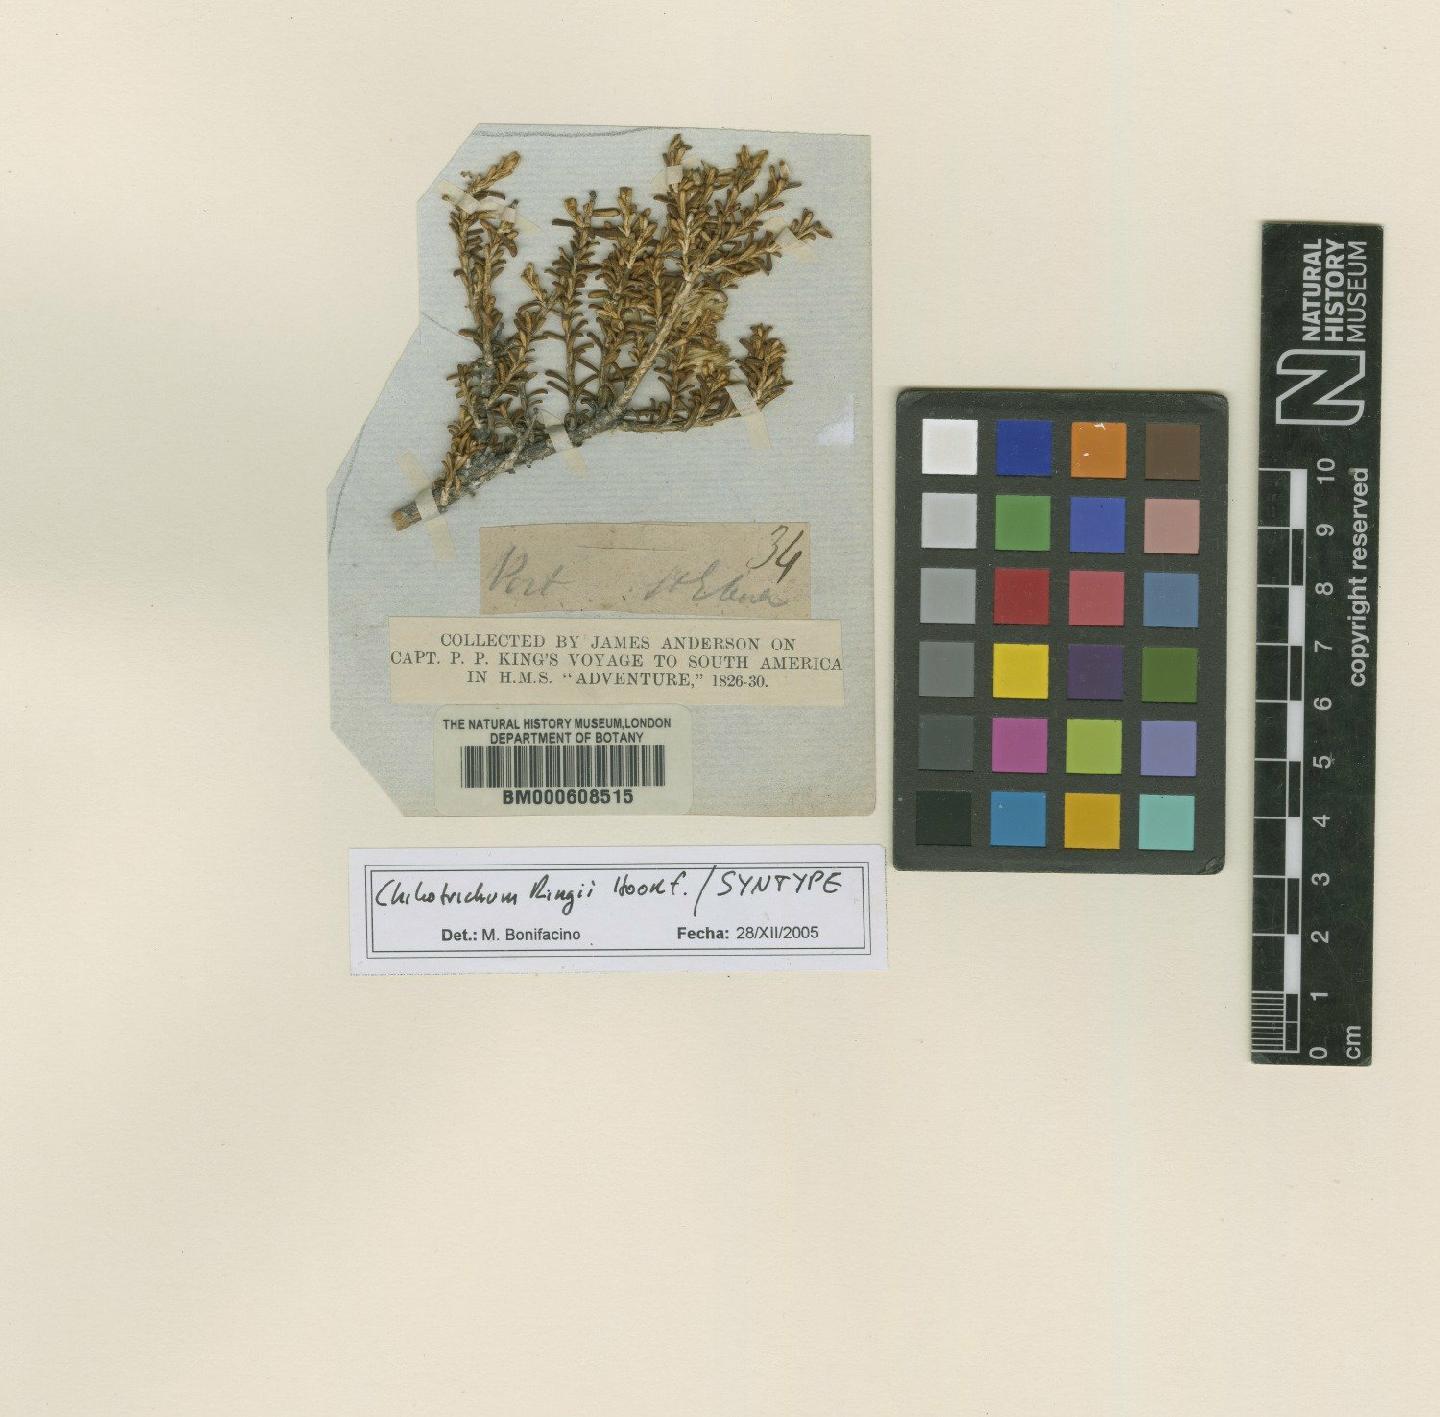 To NHMUK collection (Chiliotrichum kingii Hook.f.; Syntype; NHMUK:ecatalogue:4983668)